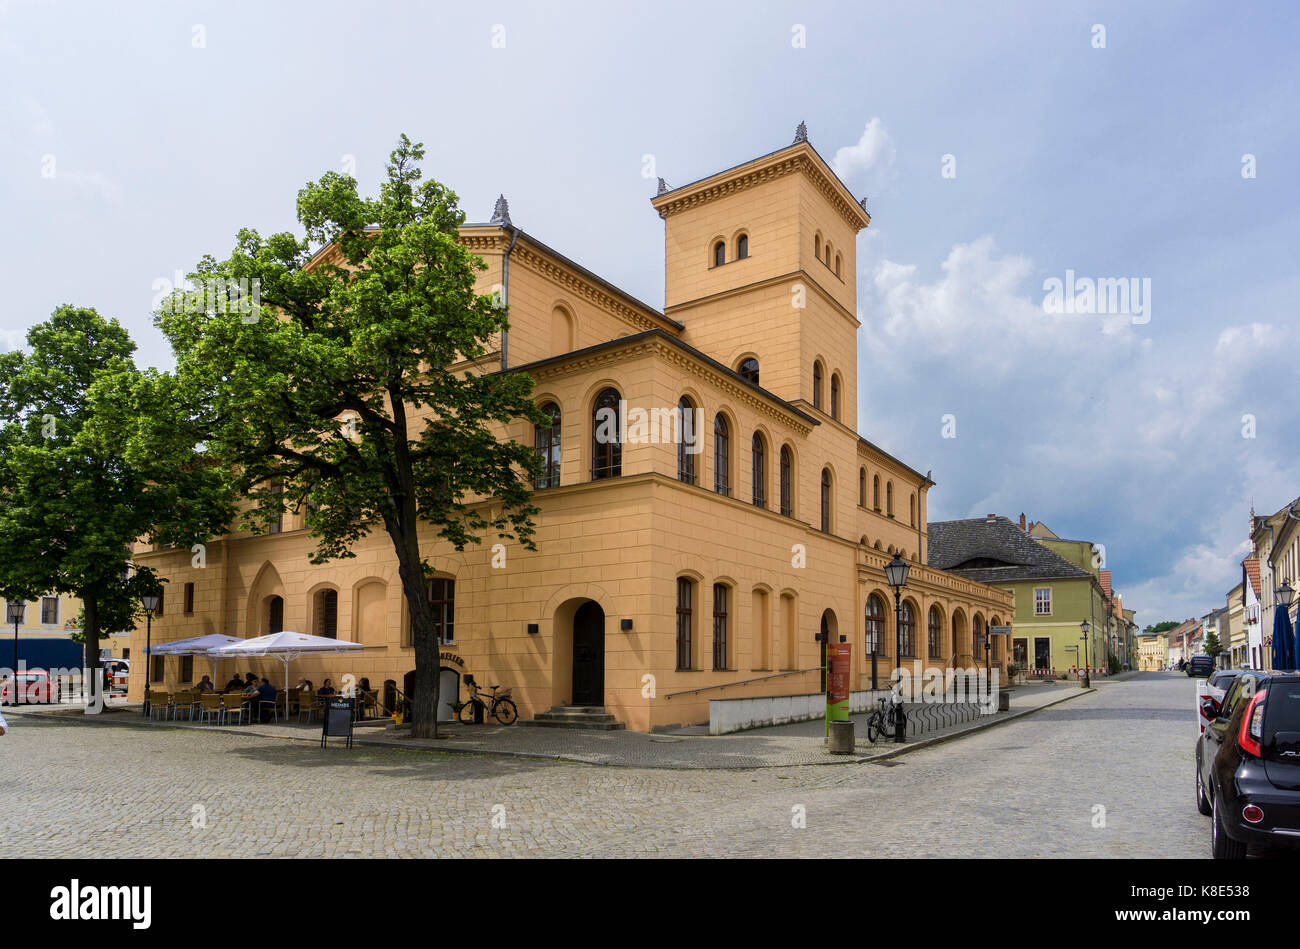 Luckau, mercato, klasszistisches city hall, Marktplatz, klasszistisches rathaus Foto Stock